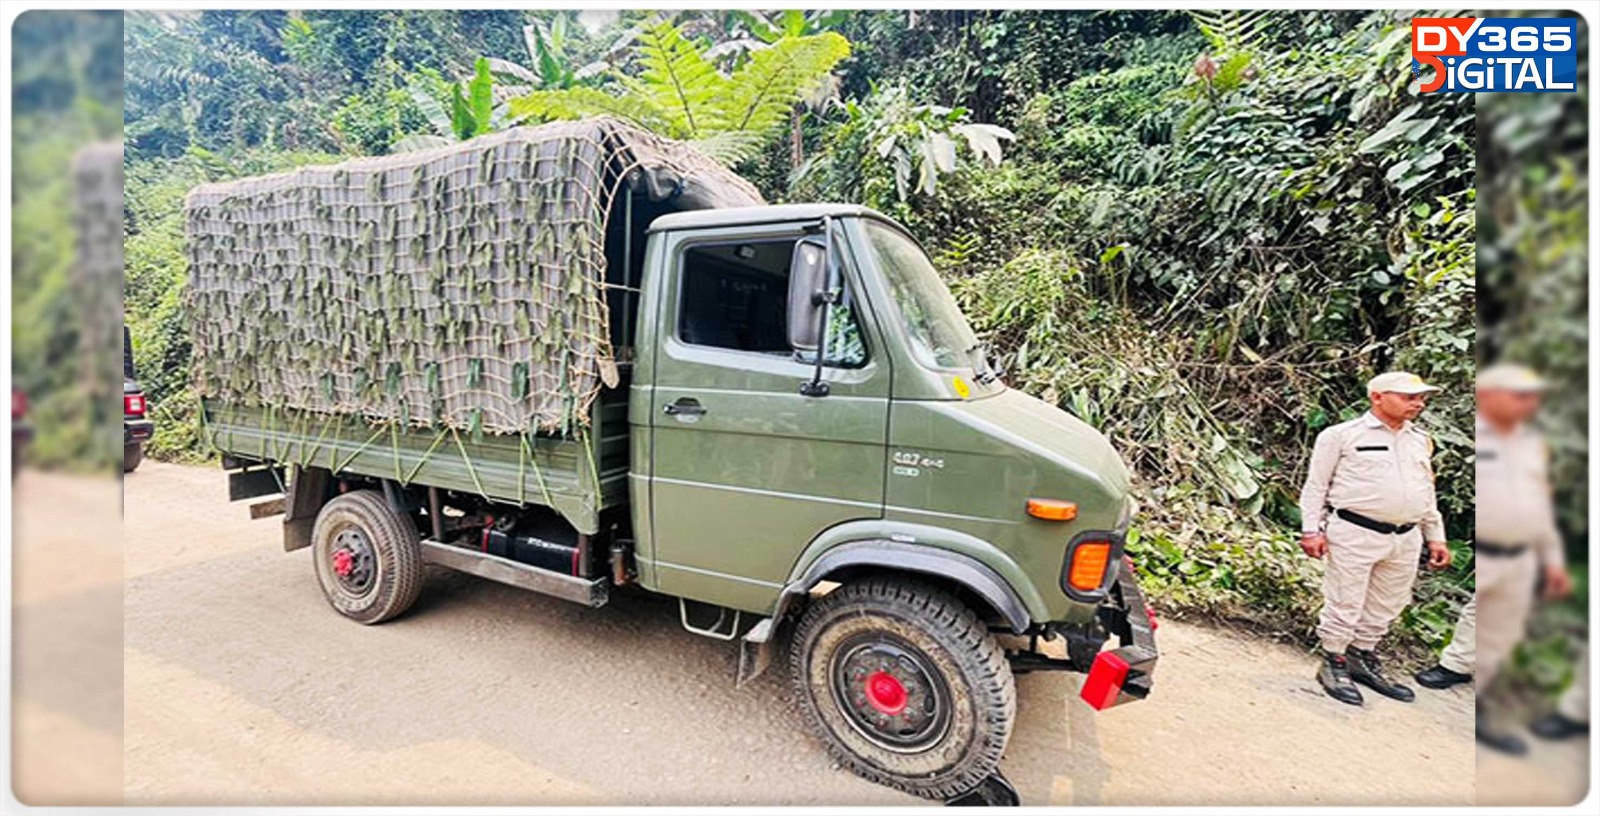 Assam Rifles Vehicle Ambushed in Tinsukia’s Namdang Area; One Personnel Injured